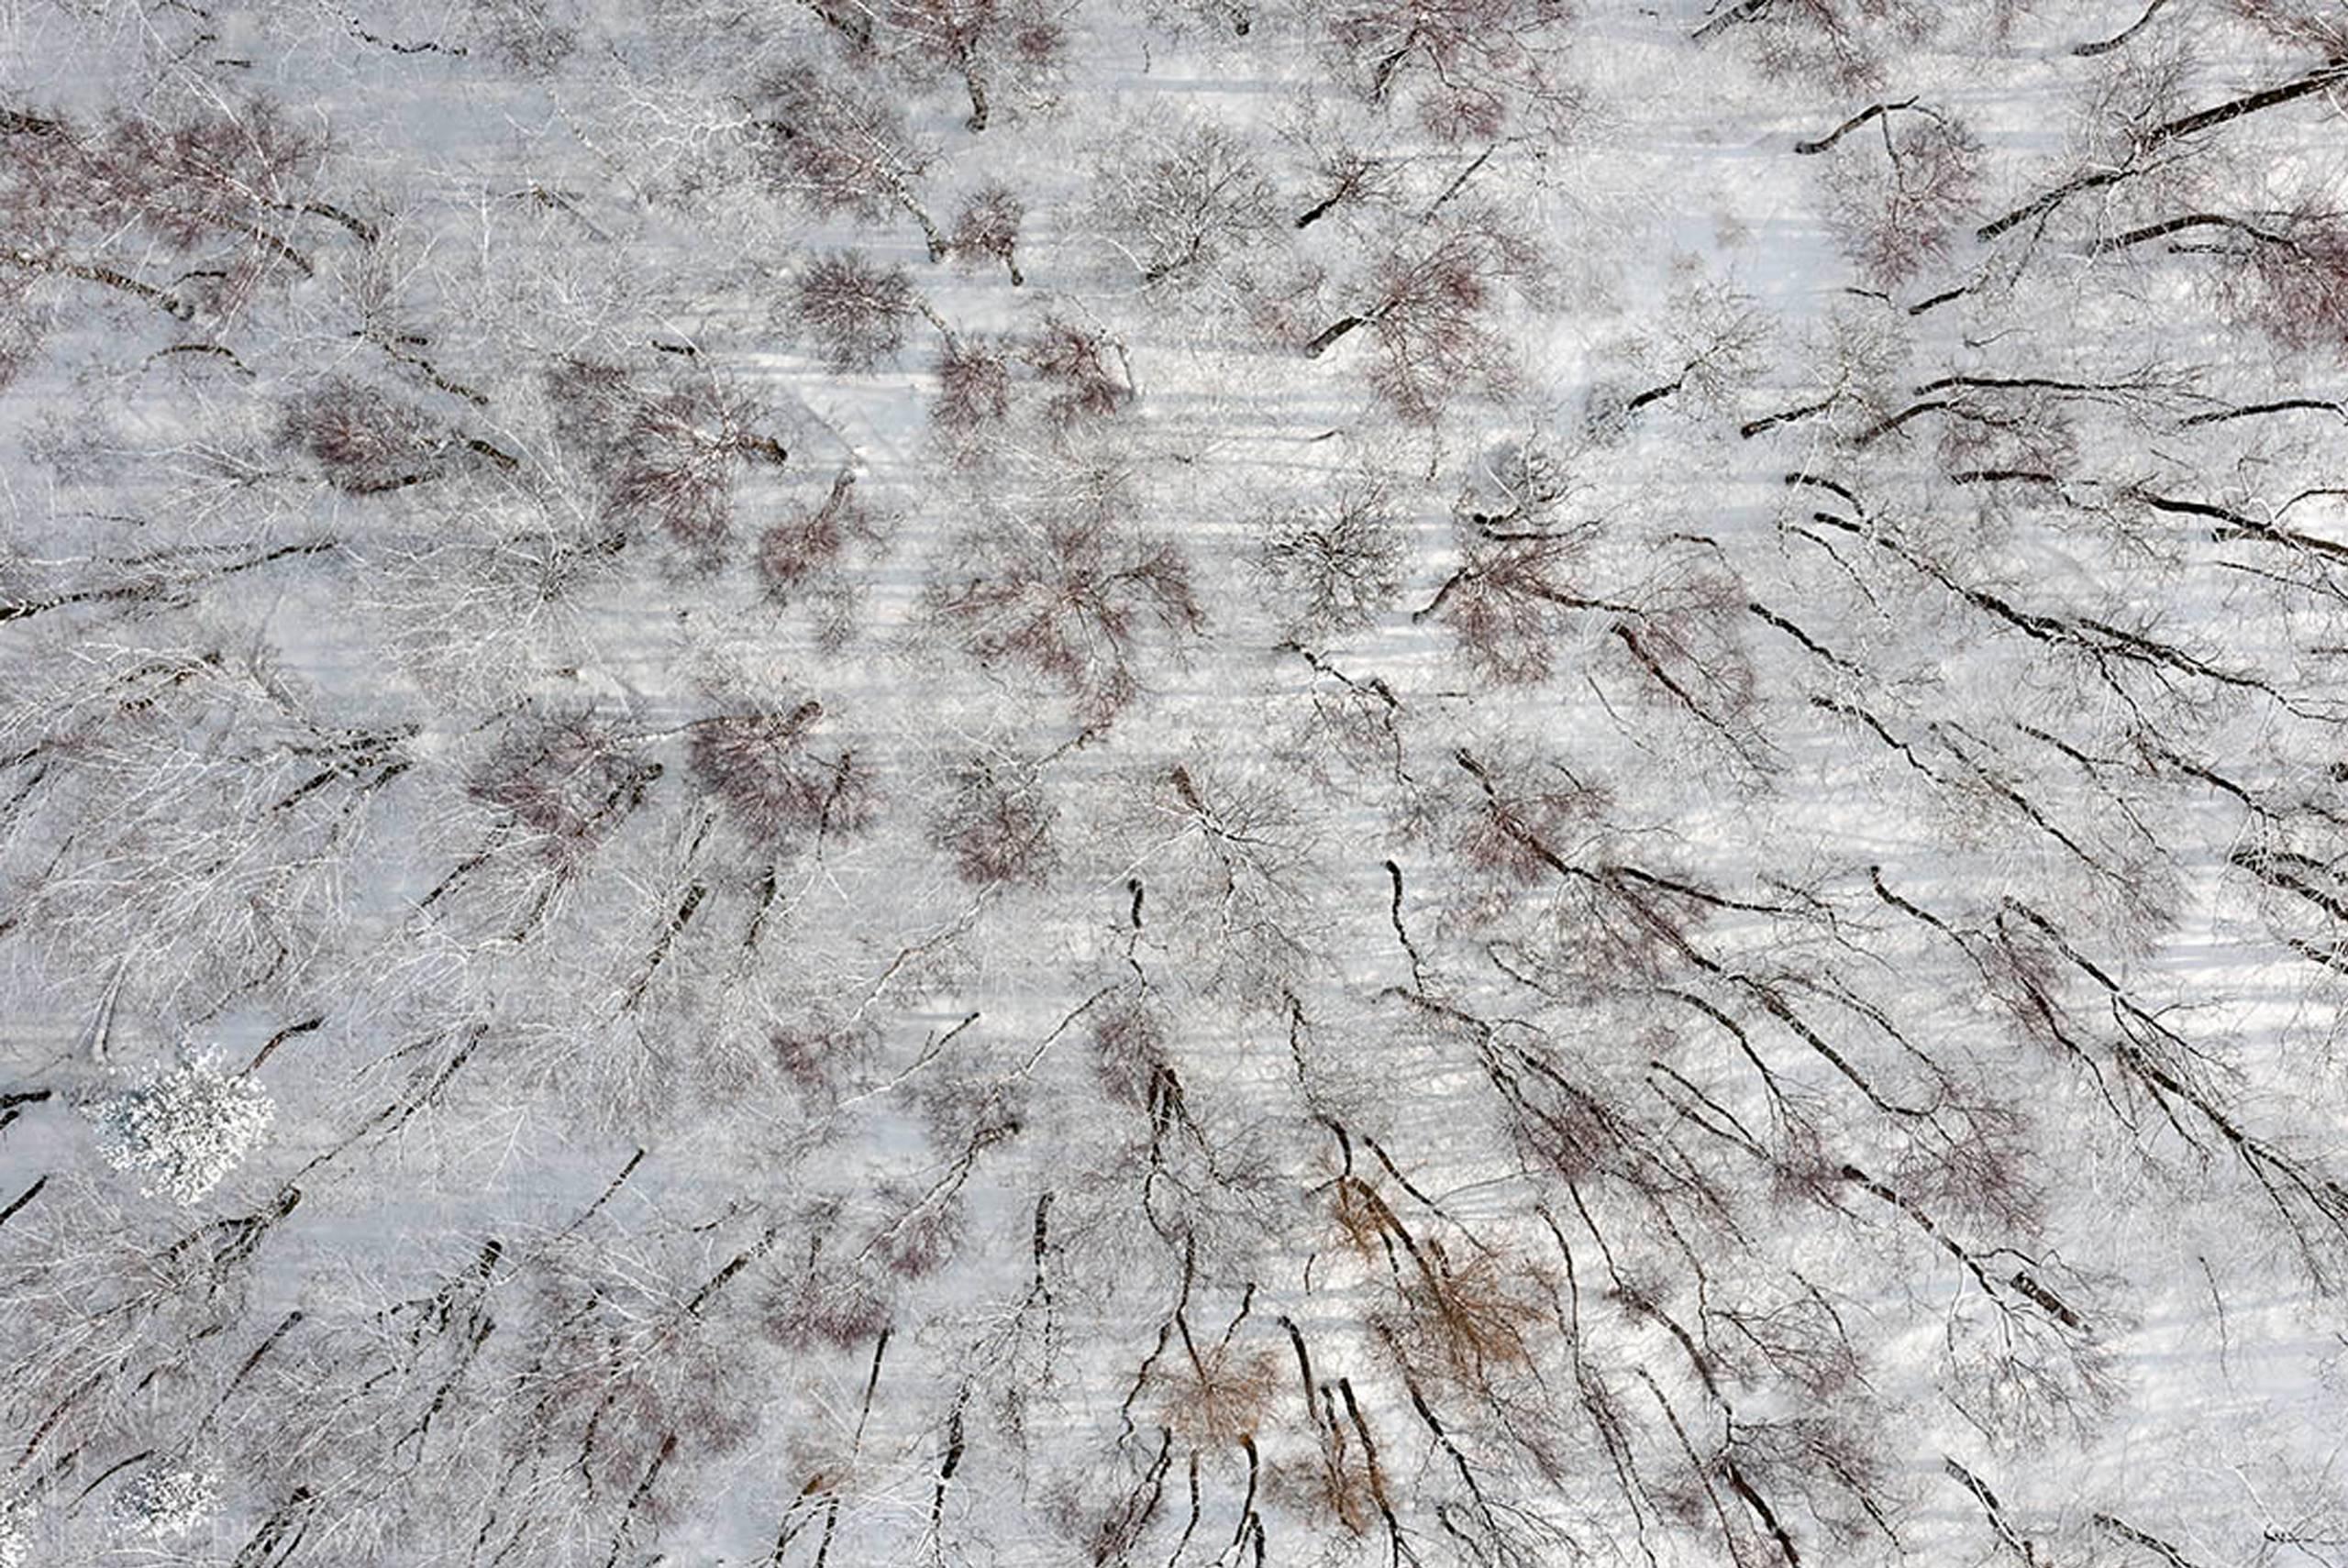 Kacper Kowalski Landscape Photograph - Seasons/Winter #02, abstract aerial landscape photograph